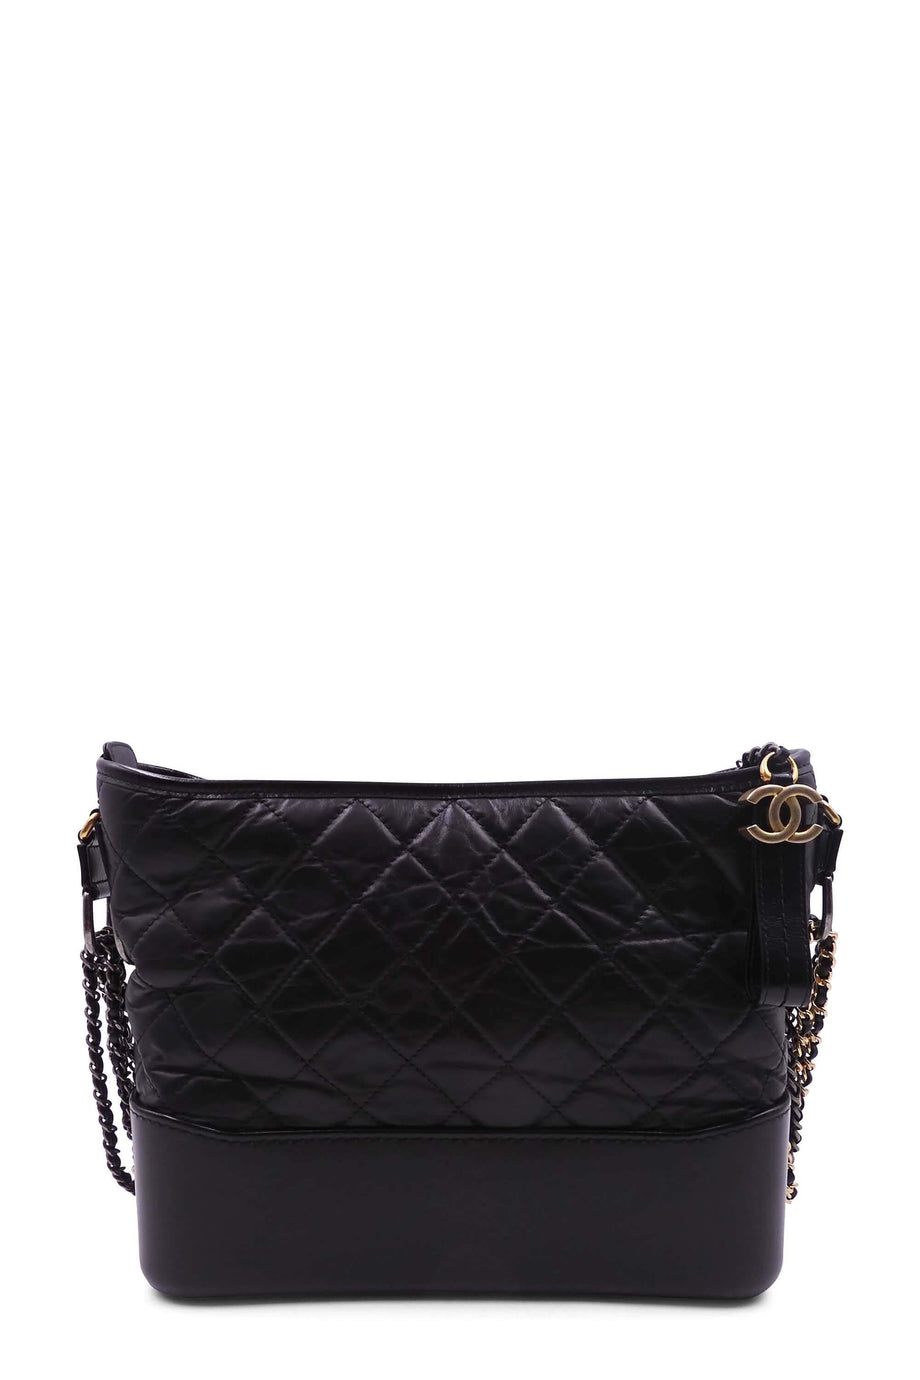 Buy Authentic, Preloved Chanel Medium Gabrielle Hobo Black Bags